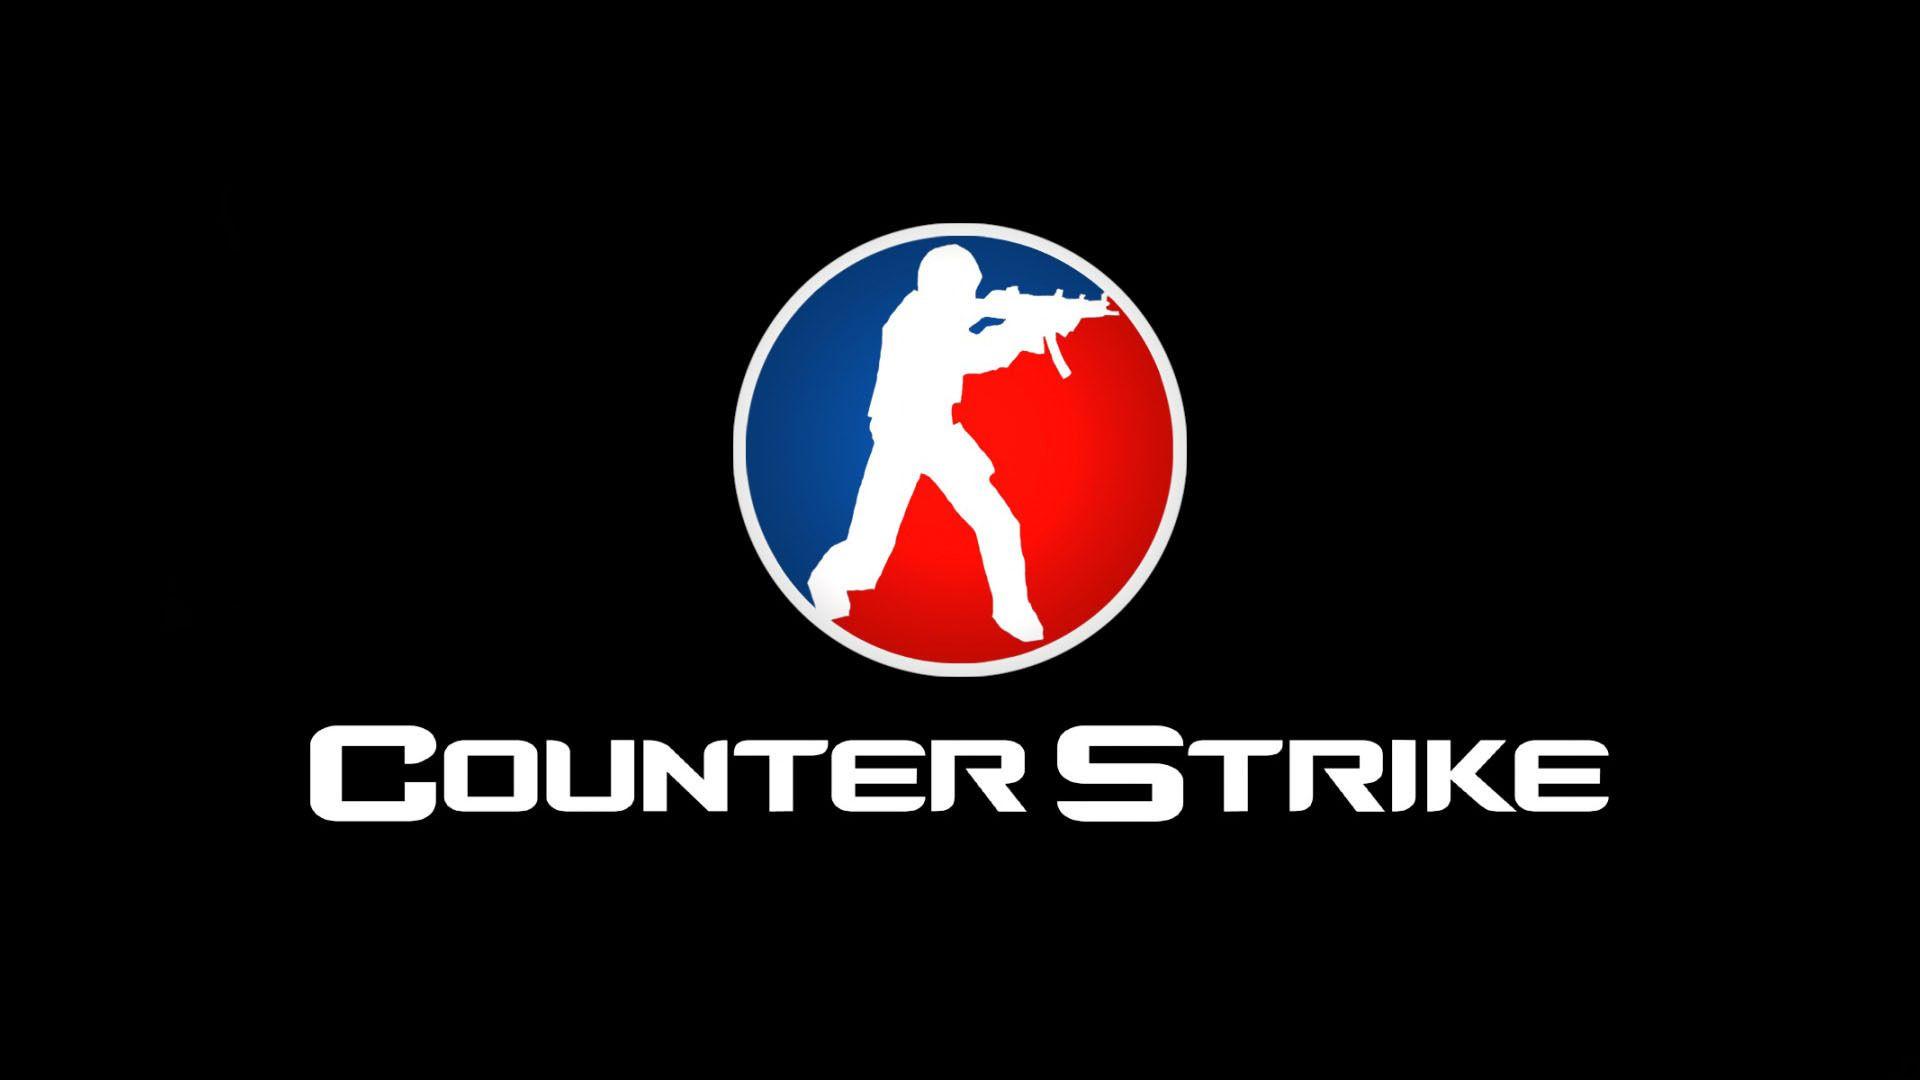 Counter Strike Wallpaper. Counter Strike Background